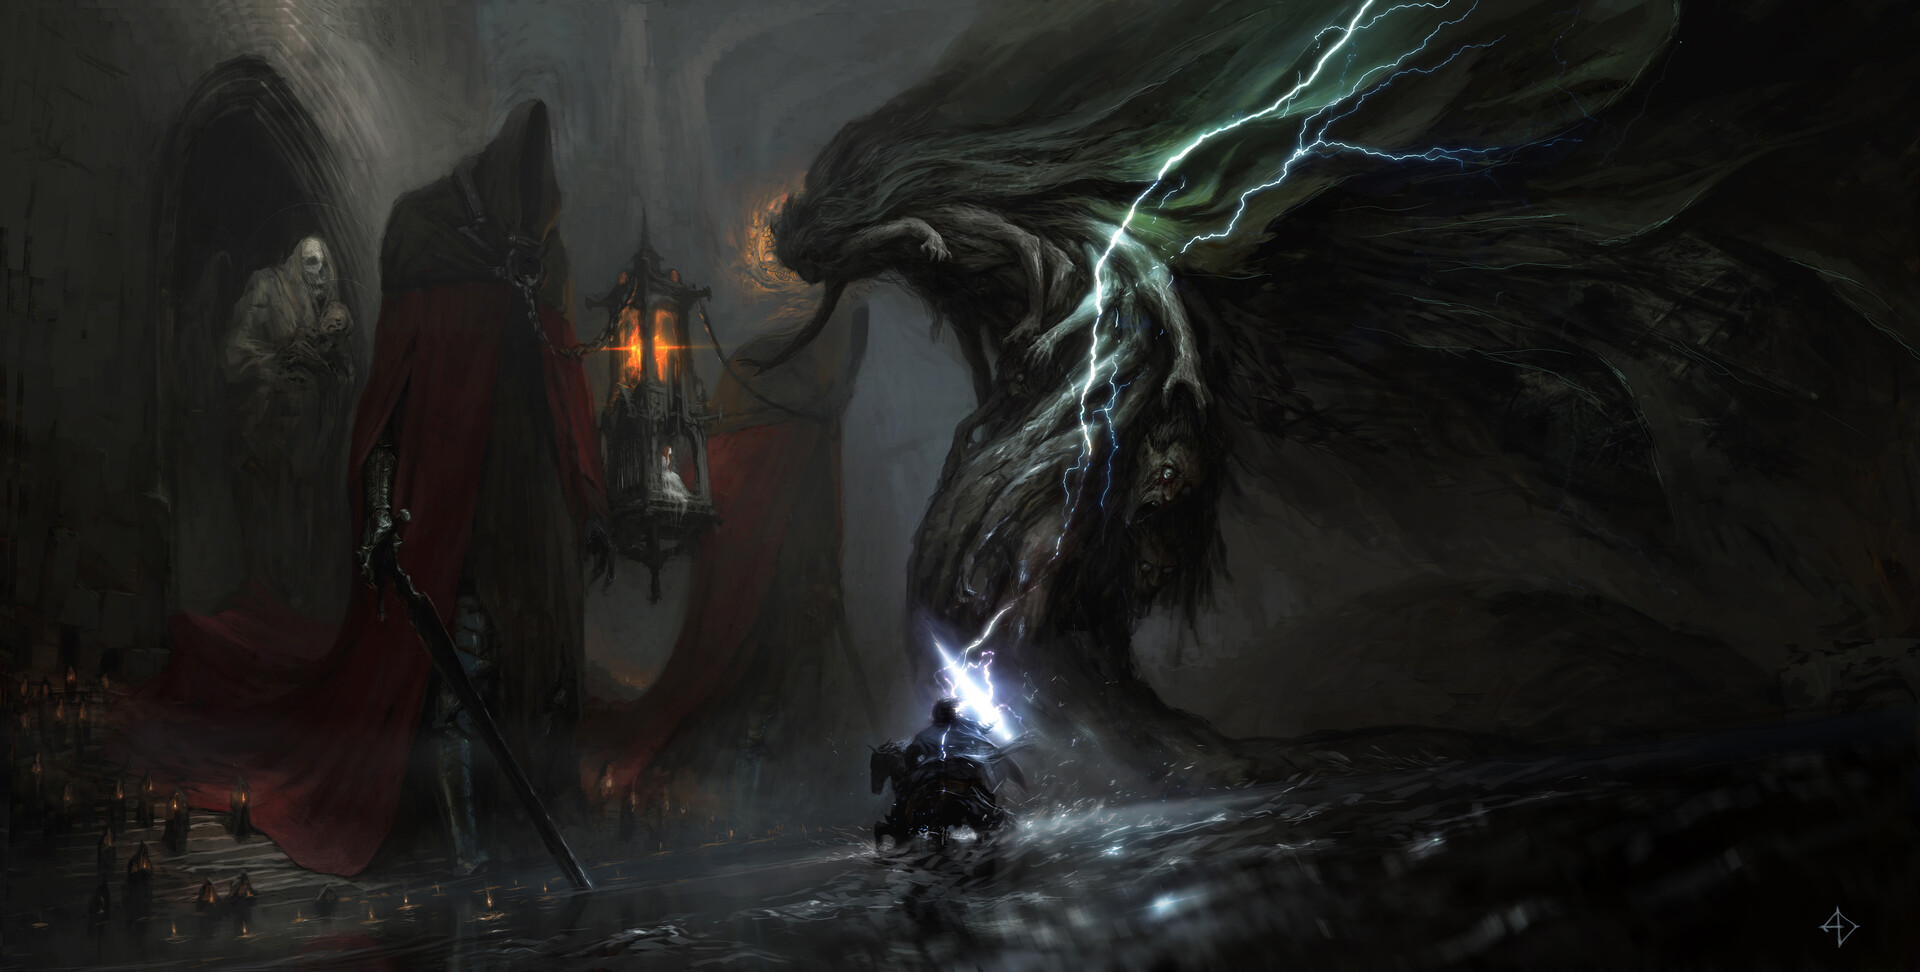 General 1920x972 Artem Demura dark digital art fantasy art giant lightning creature lantern sword statue horse